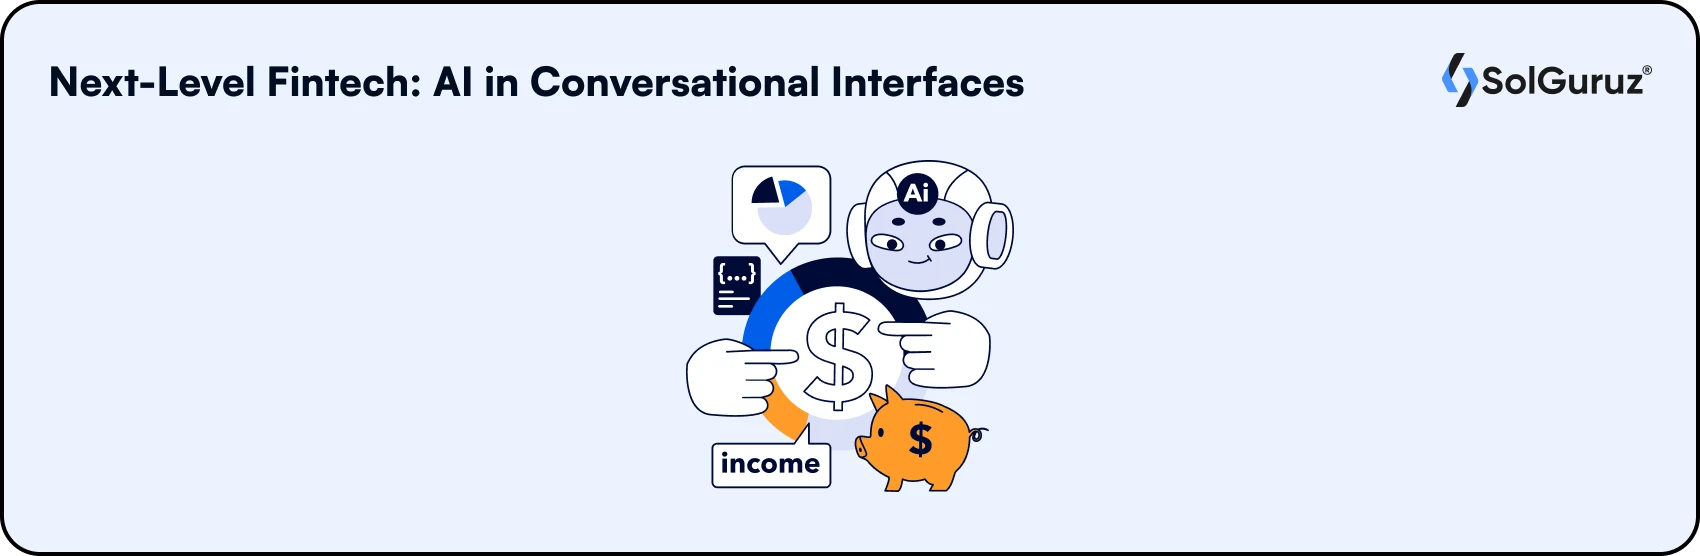 Next-Level Fintech: AI in Conversational Interfaces